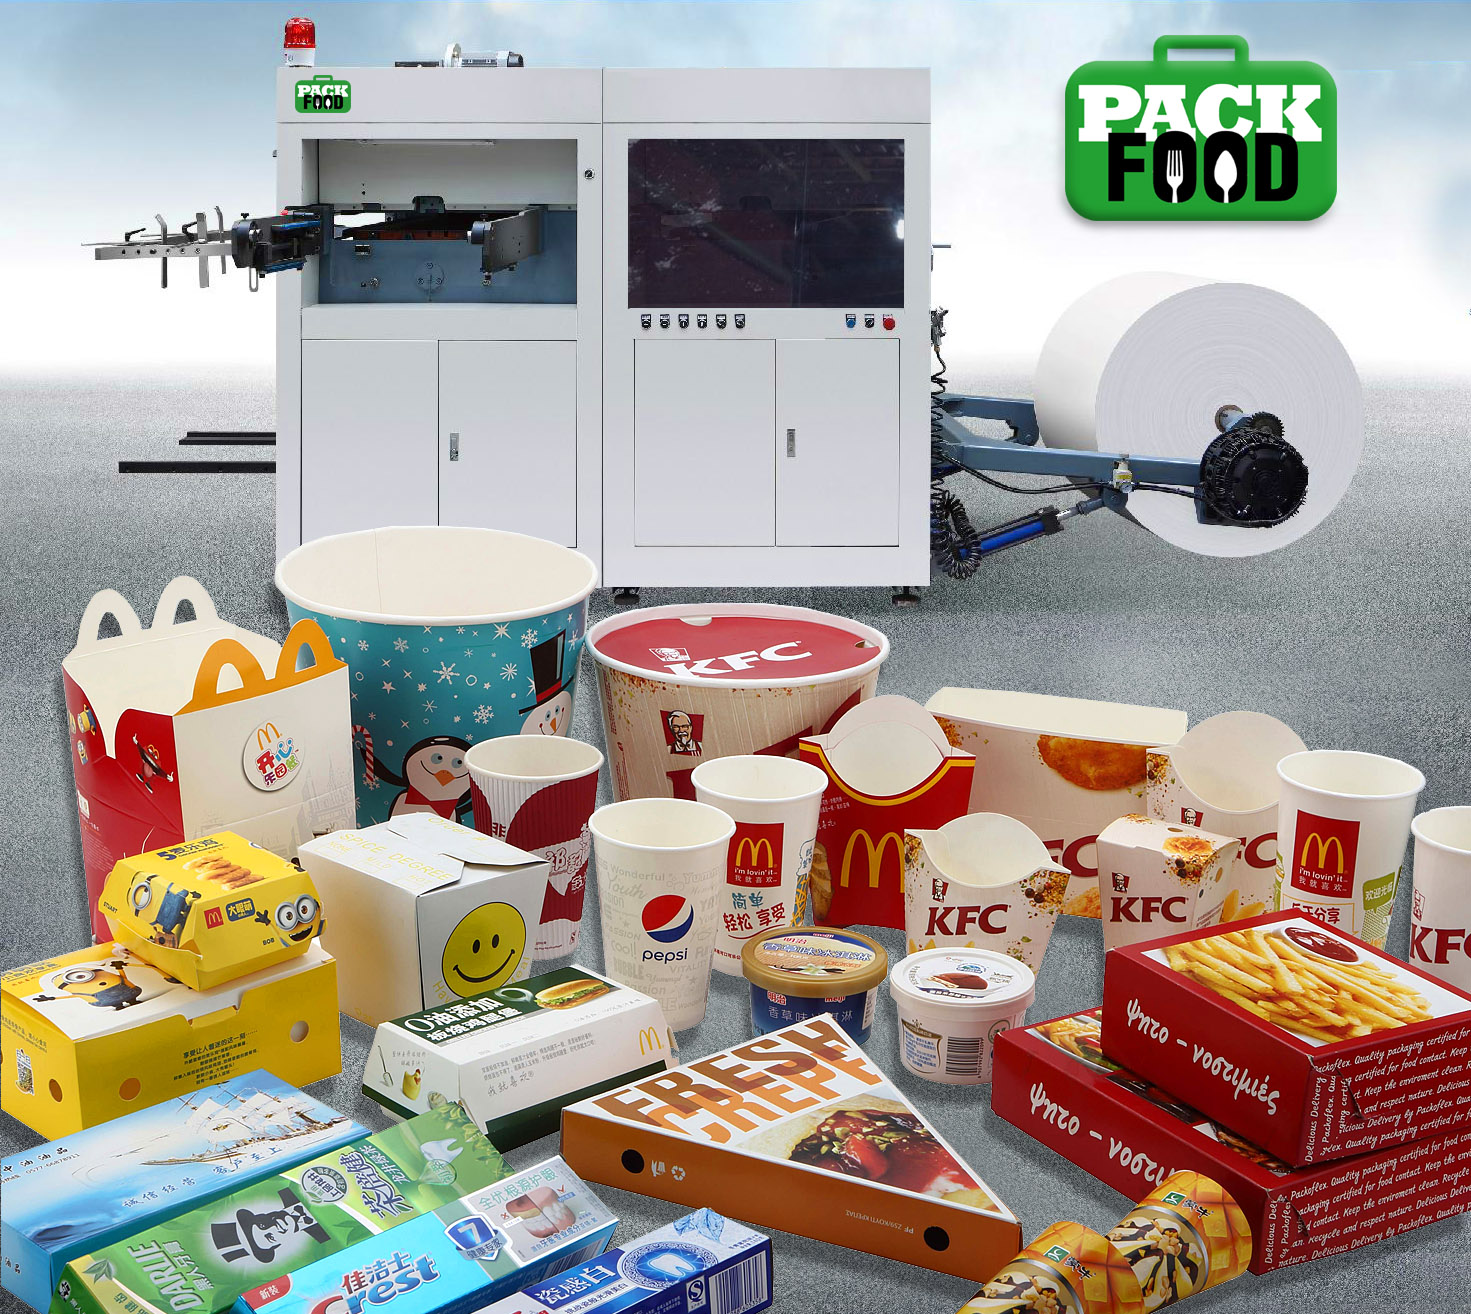 Apolo - PackFood - Máquinas de Embalagens para Fast Food & Delivery - Copos, caixas, tampas, pratos... de papel